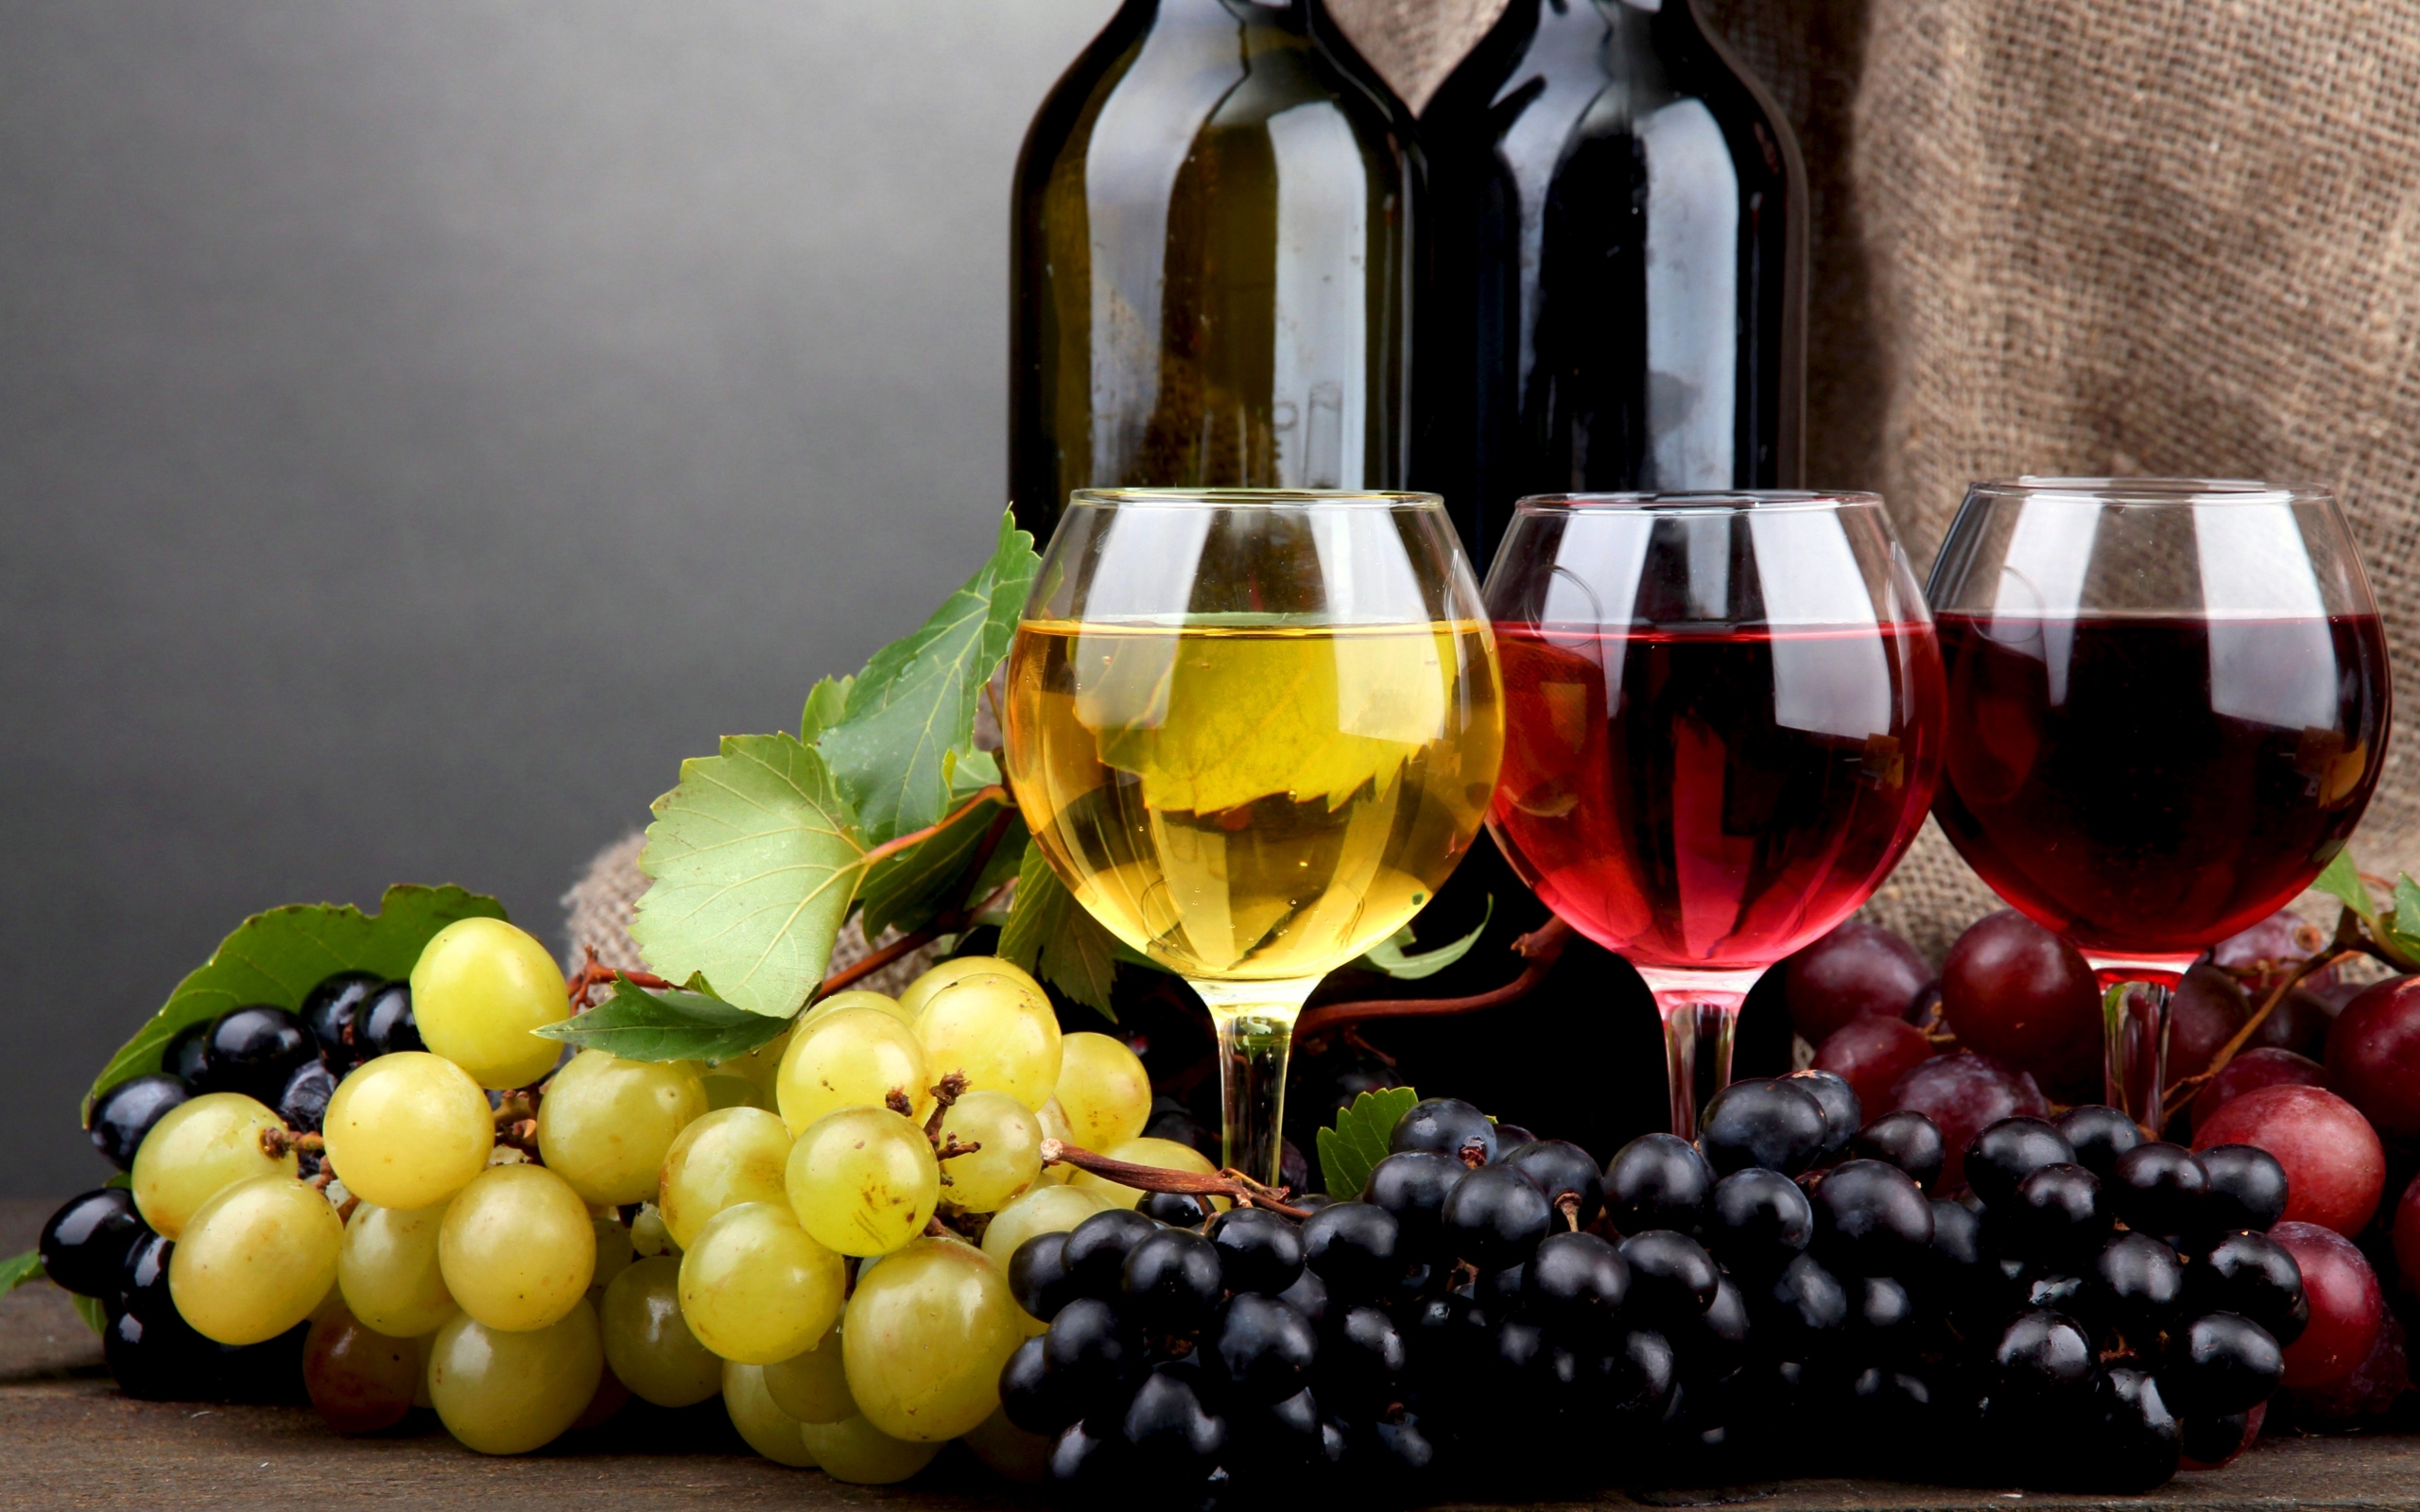  wine and wine glass ipad wallpaper hd download background theme 2560x1600